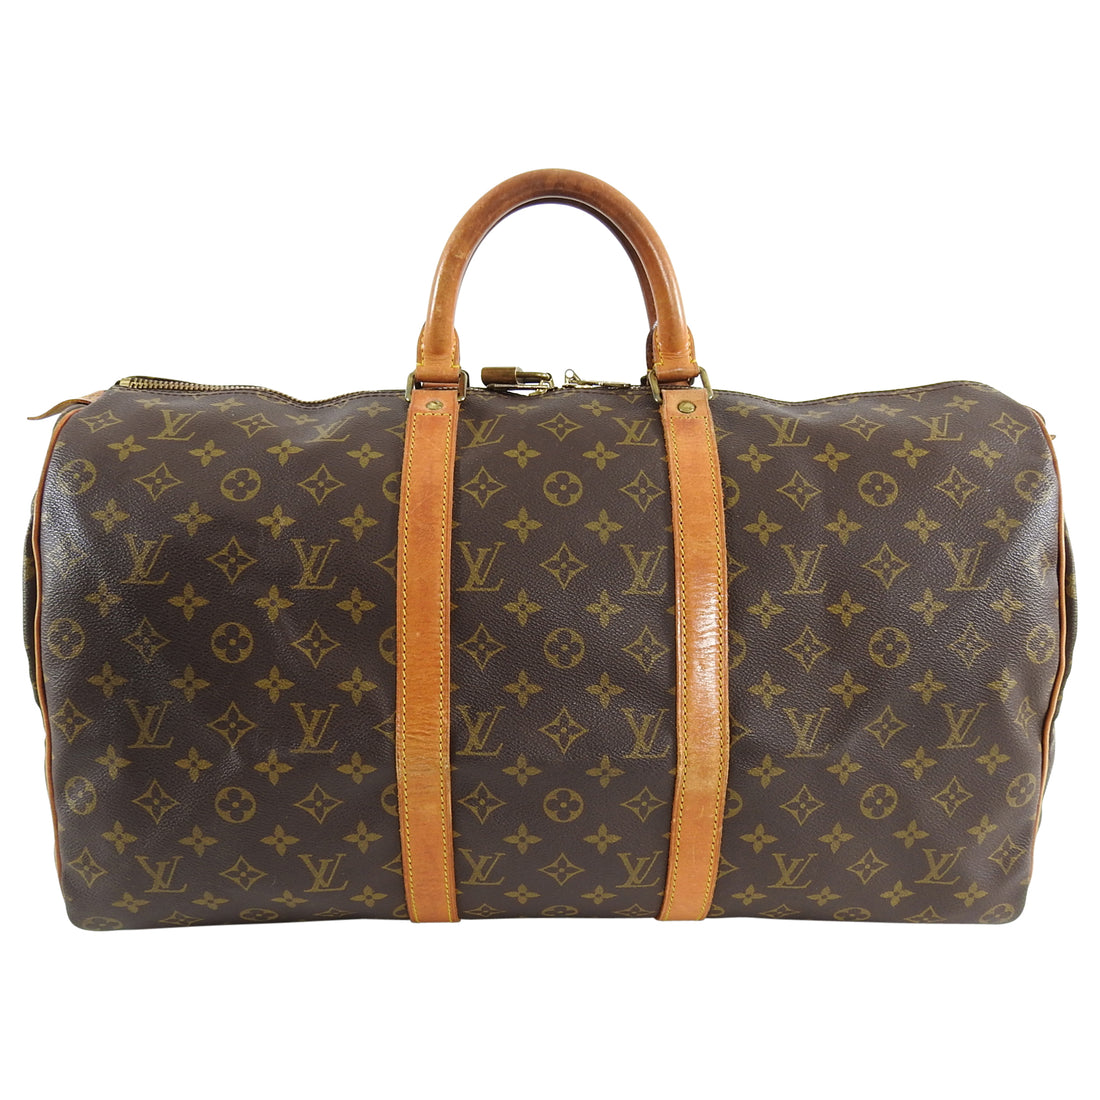 Sold Price: Vintage Louis Vuitton Duffel Bag February 4, 0122 10